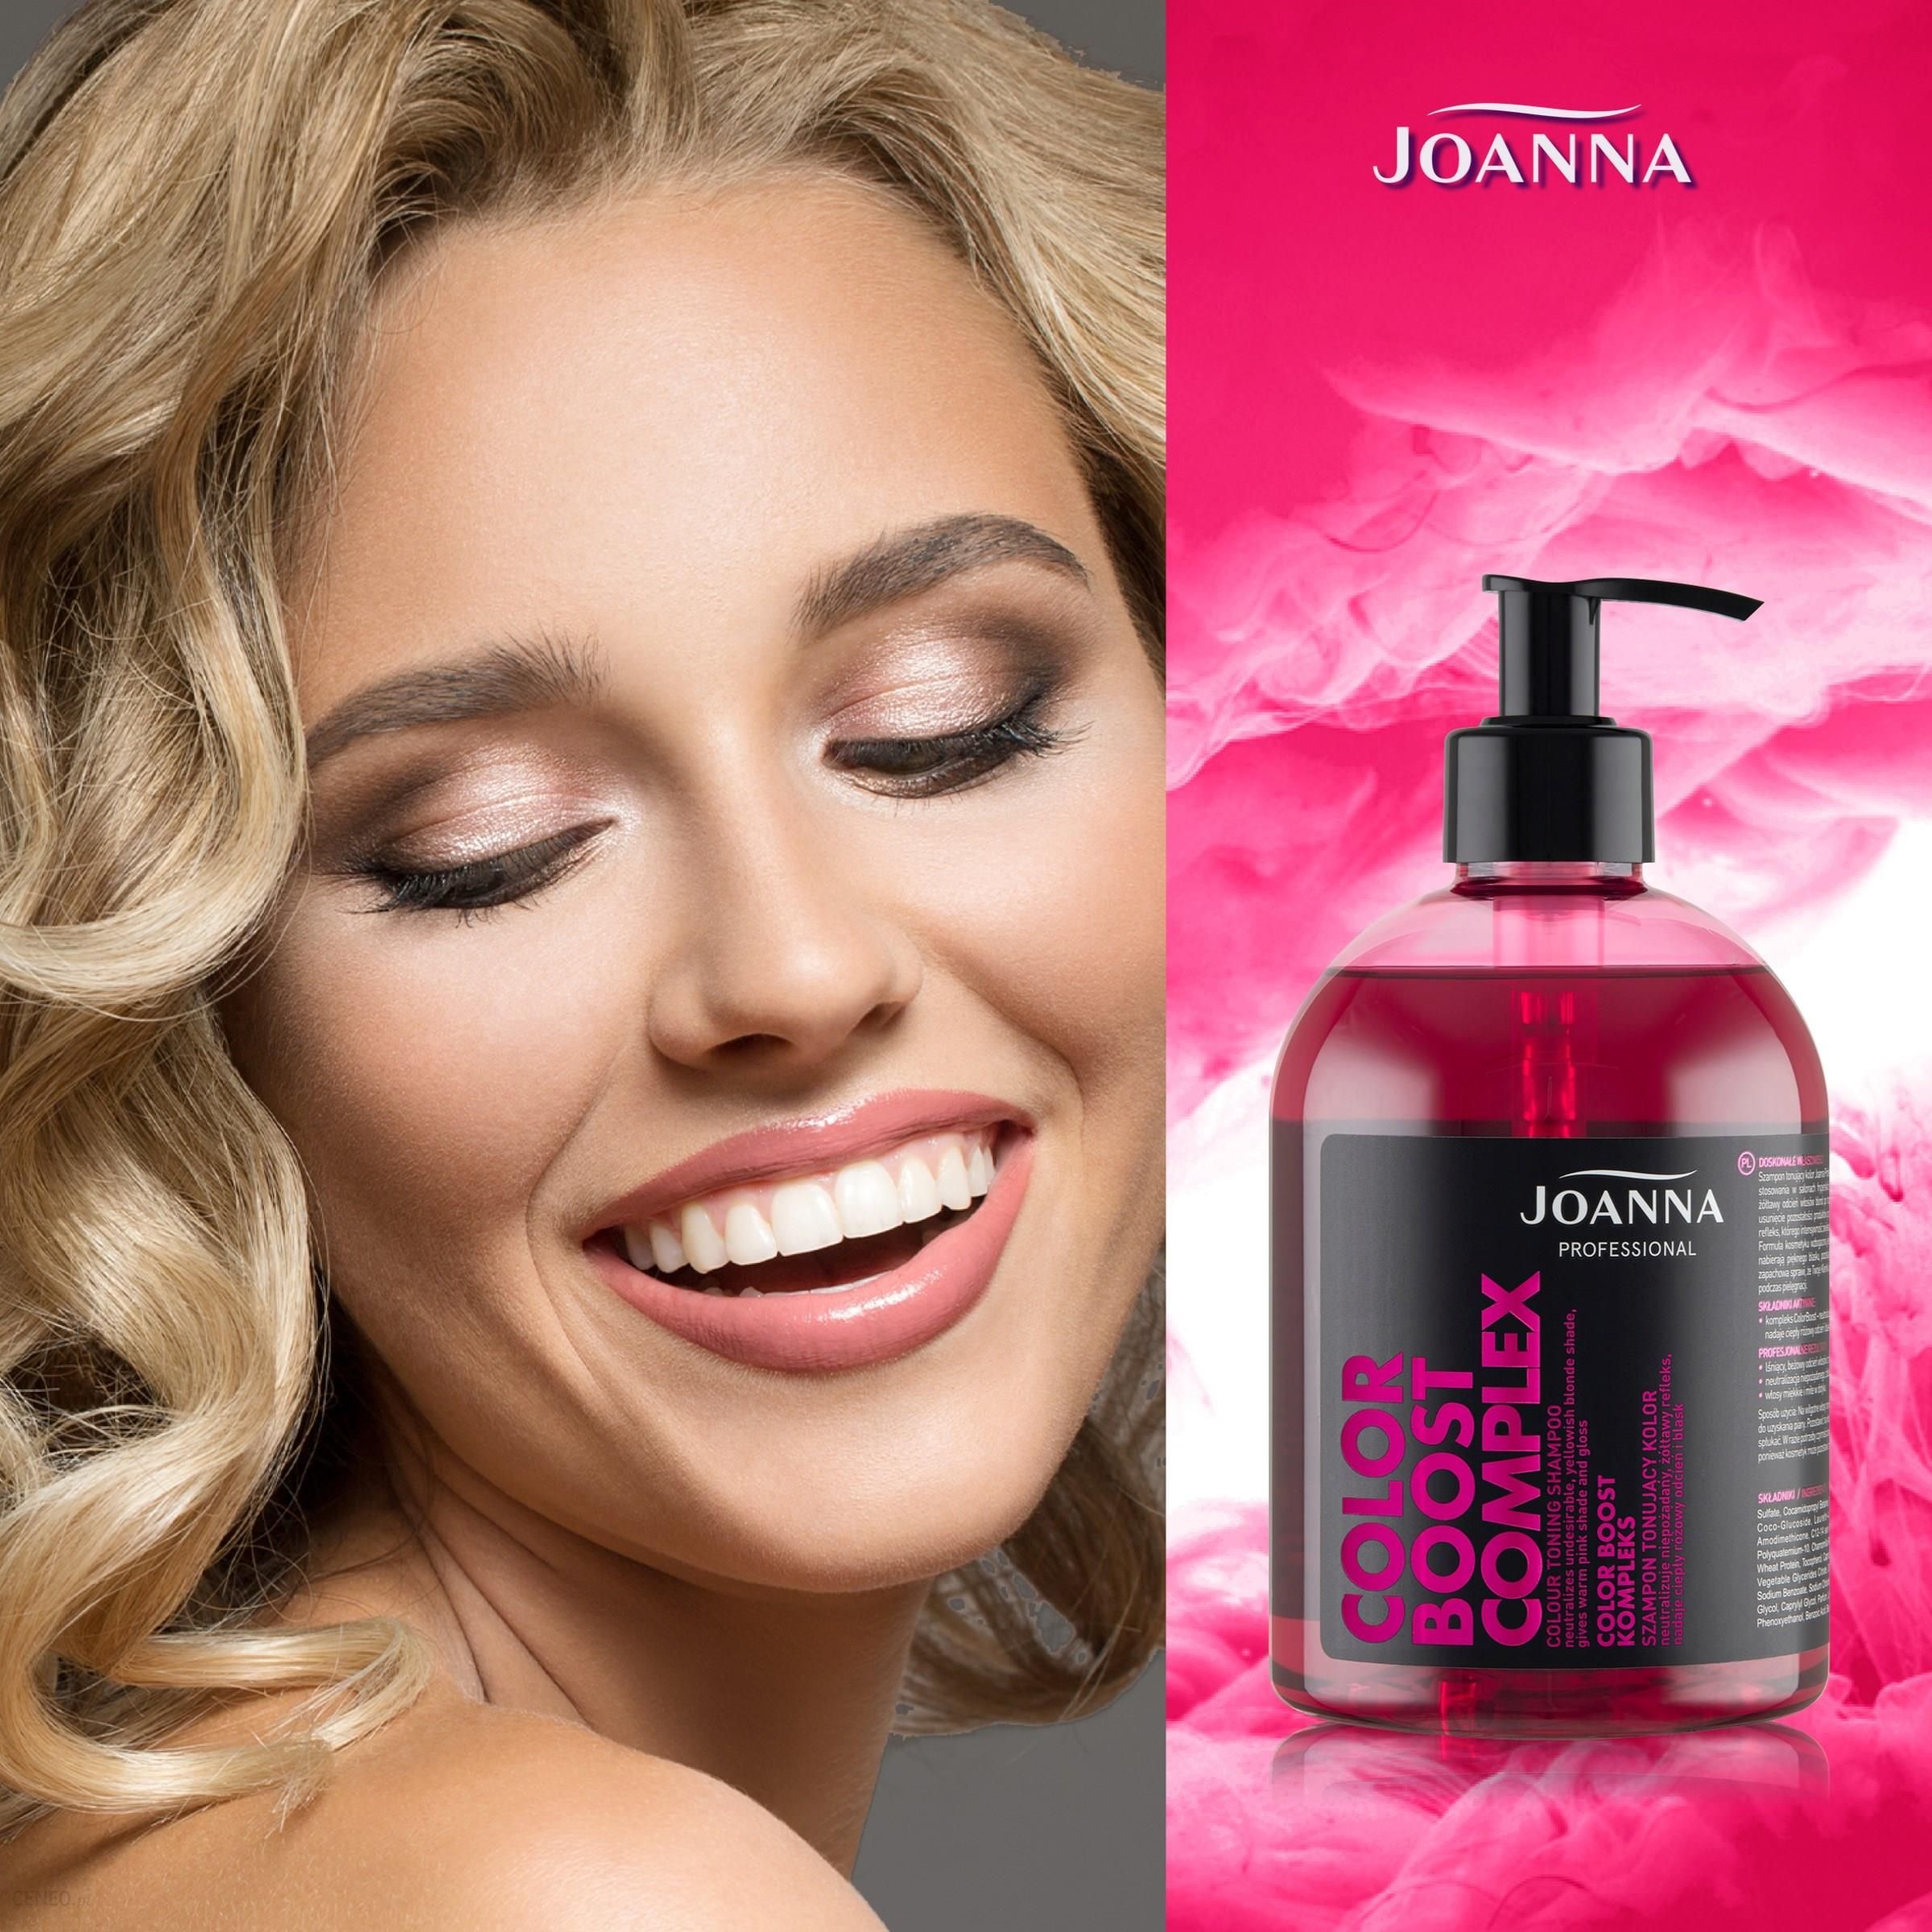 joanna professional color boost kompleks szampon tonujący kolor